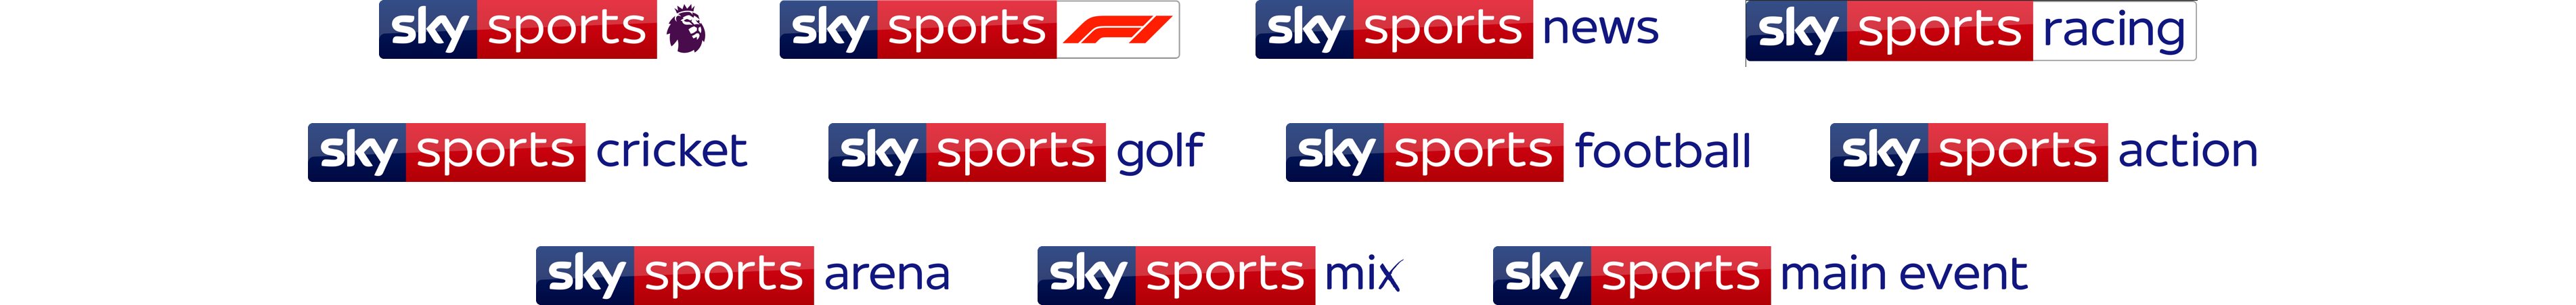 Sky sport live streaming. Телеканал Sky Sports News логотип. Sky Sport 24 логотип. Sky Sport collection логотип. Скай Медиа.